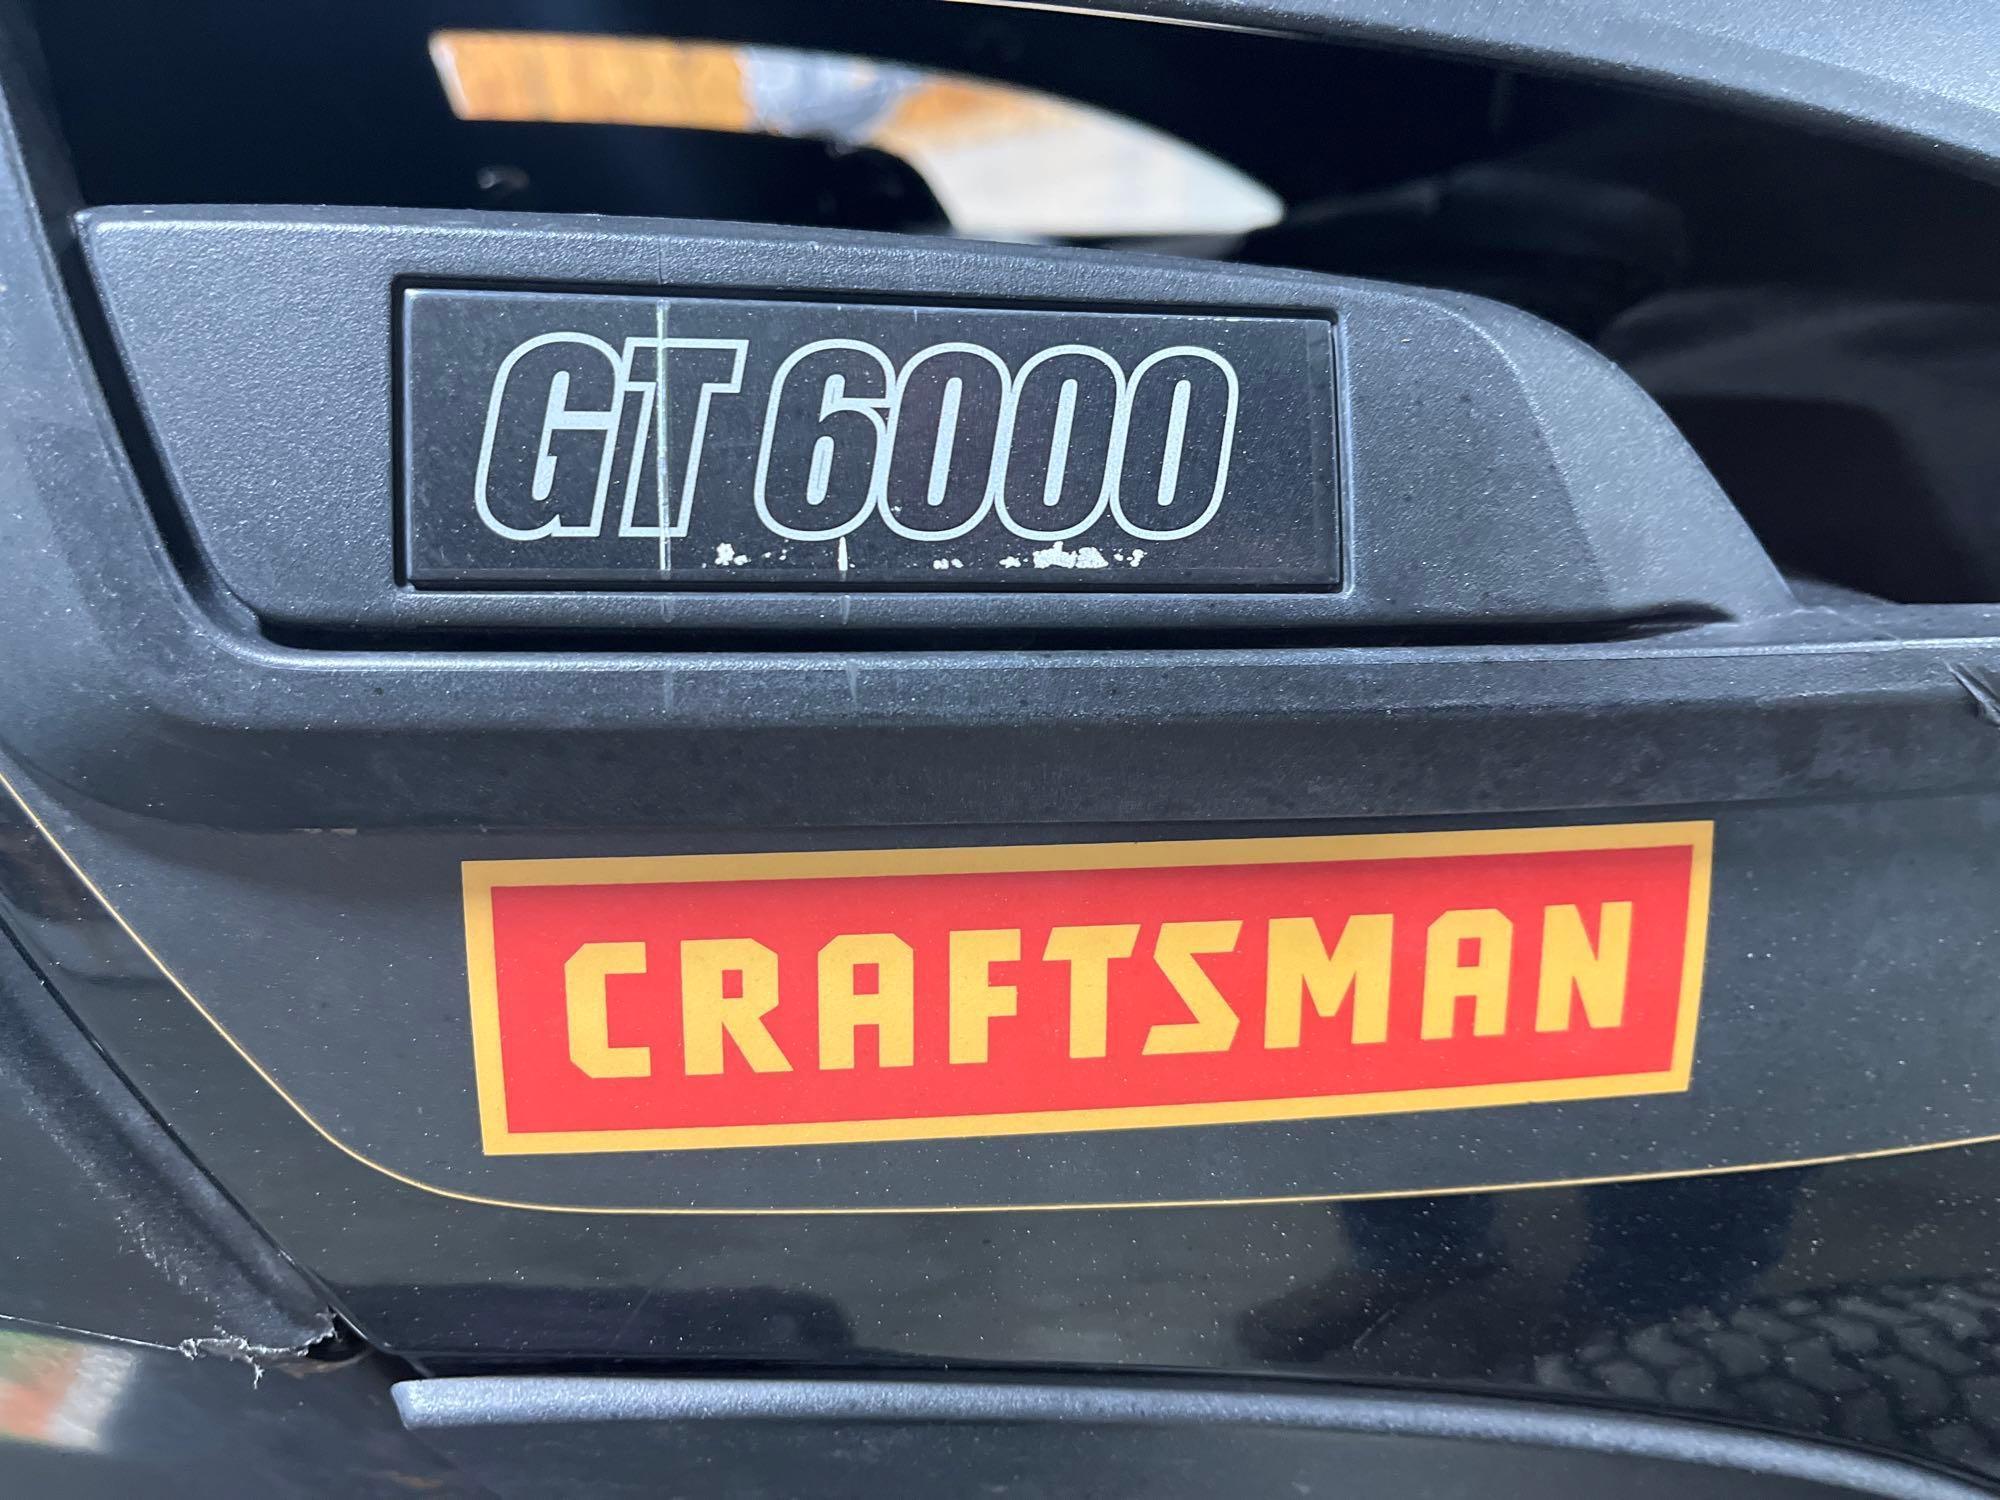 Craftsman GT6000 Garden Tractor.